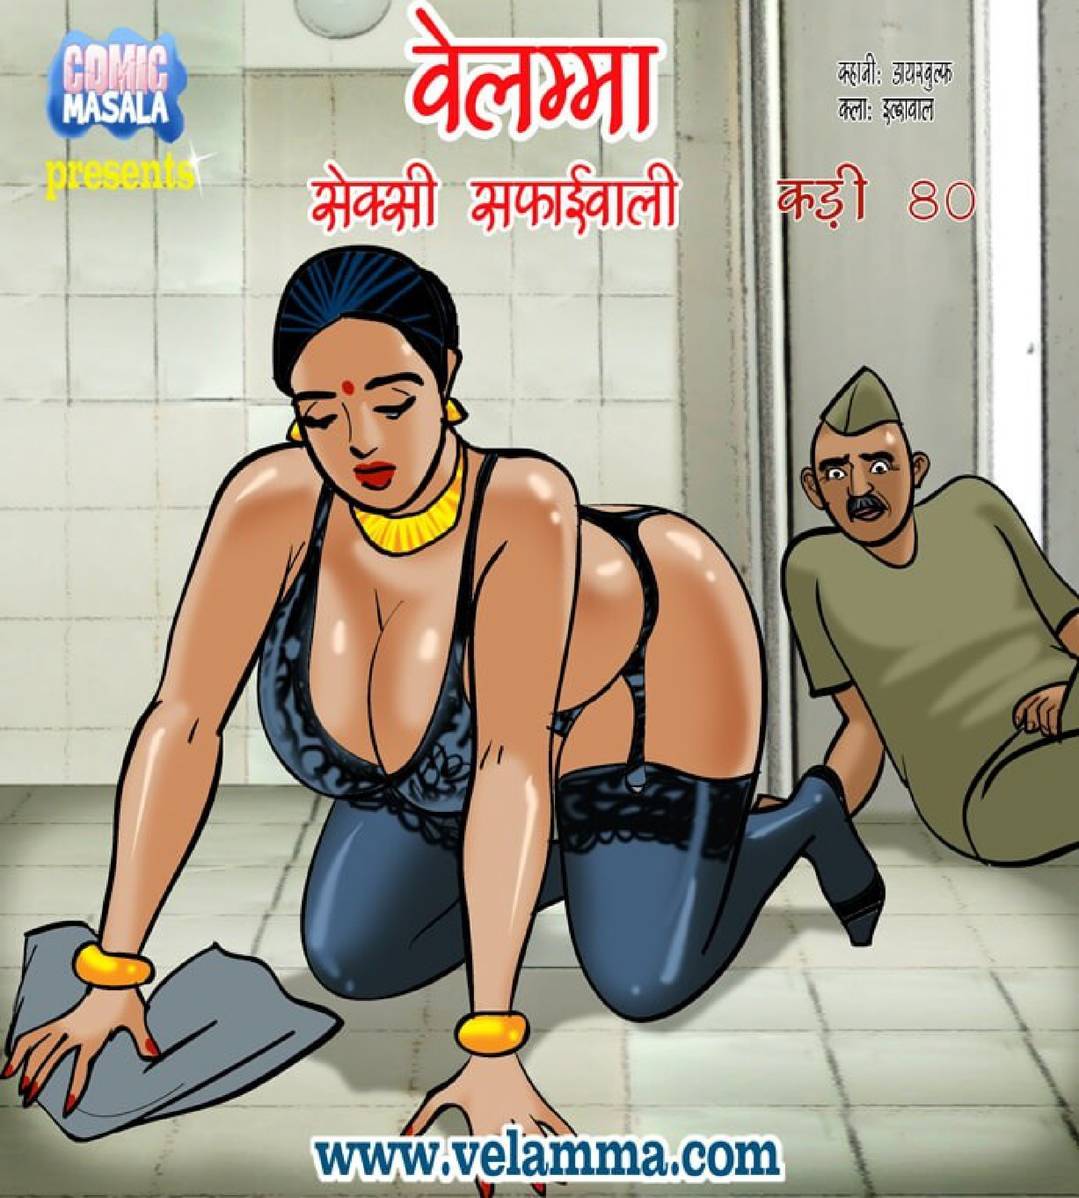 Velamma Episode 80 Hindi – Sexy safaiwali (सैक्सी सफाइवाली) - 7 - FSIComics